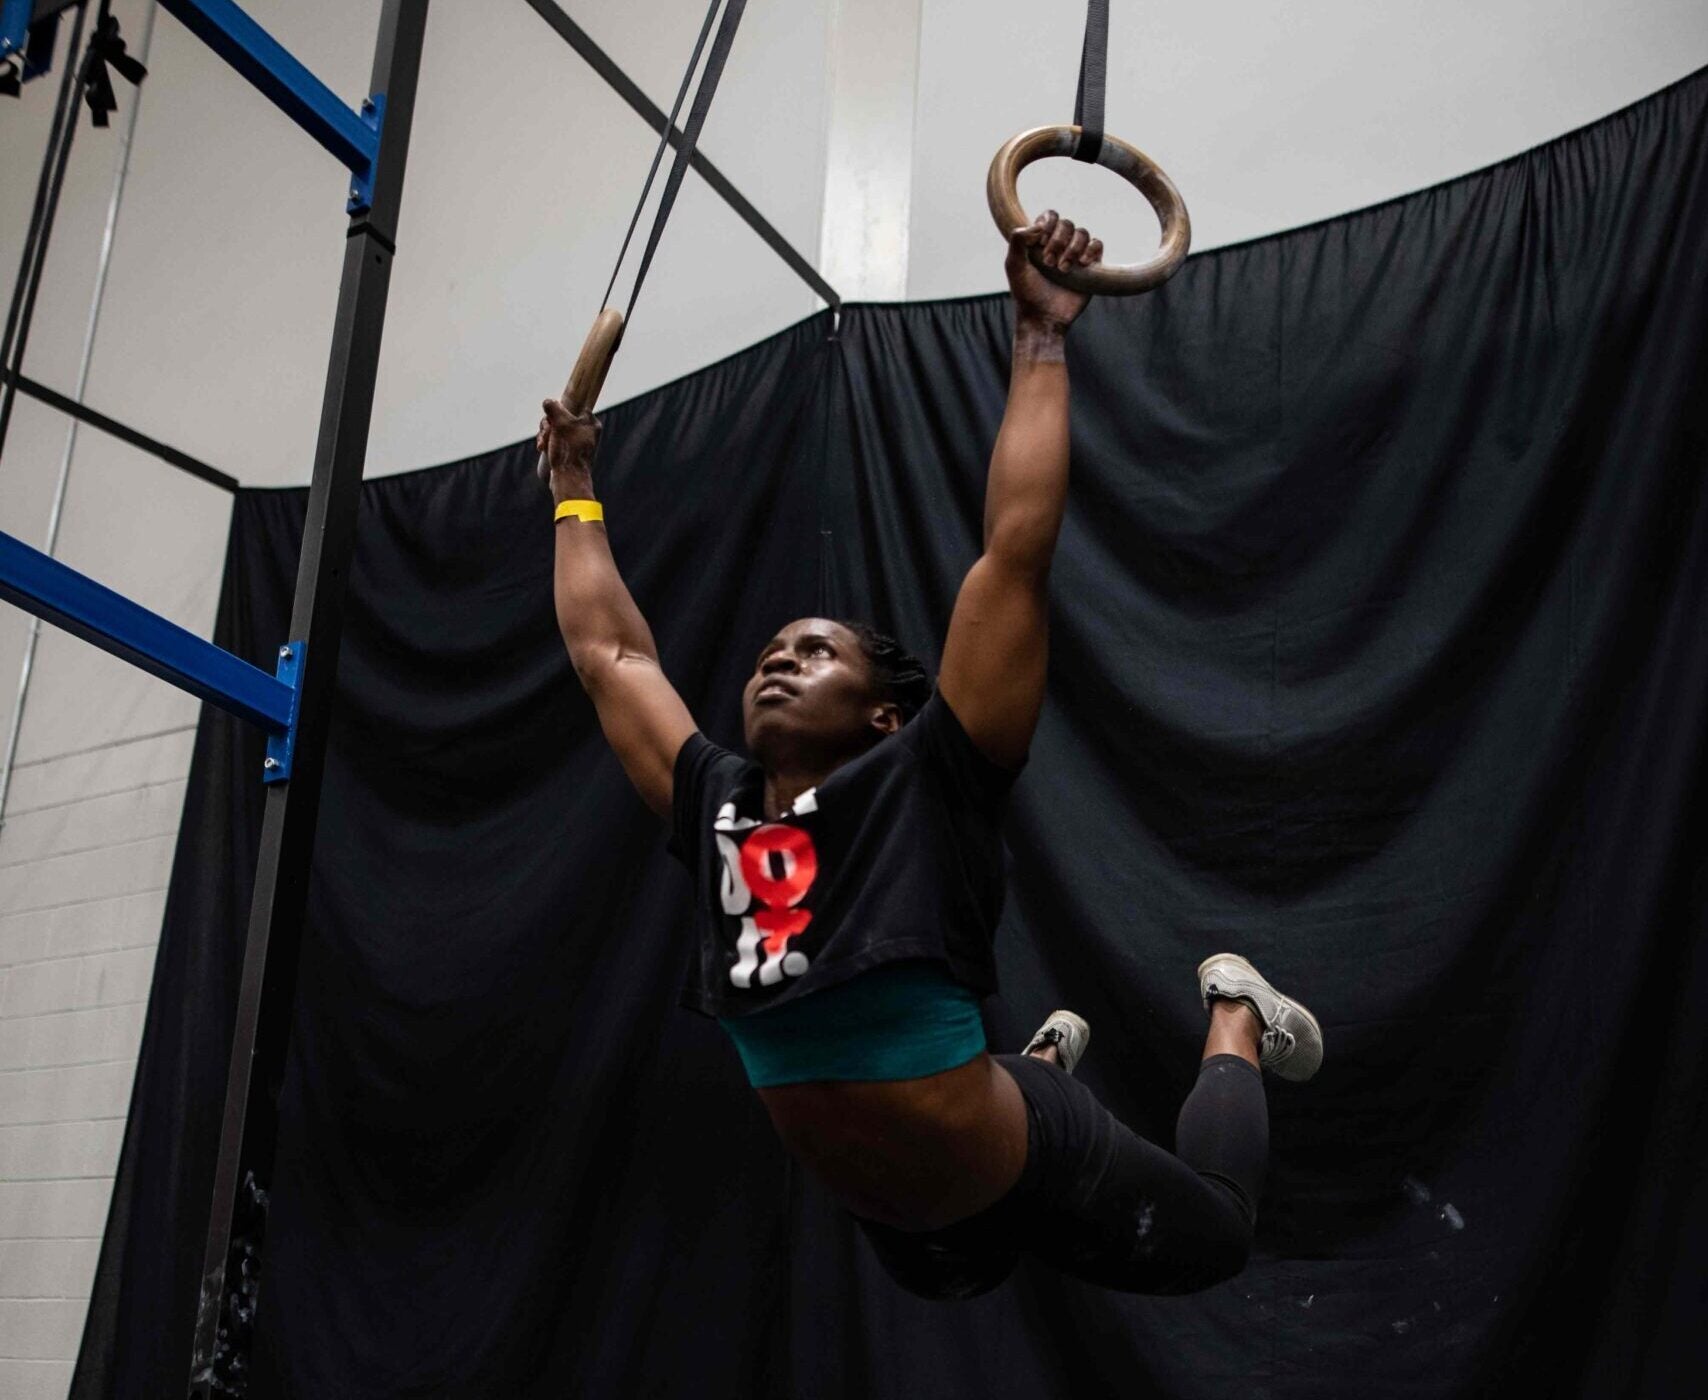 Vegan CrossFit athlete Briana Jones trains on gymnastic rings